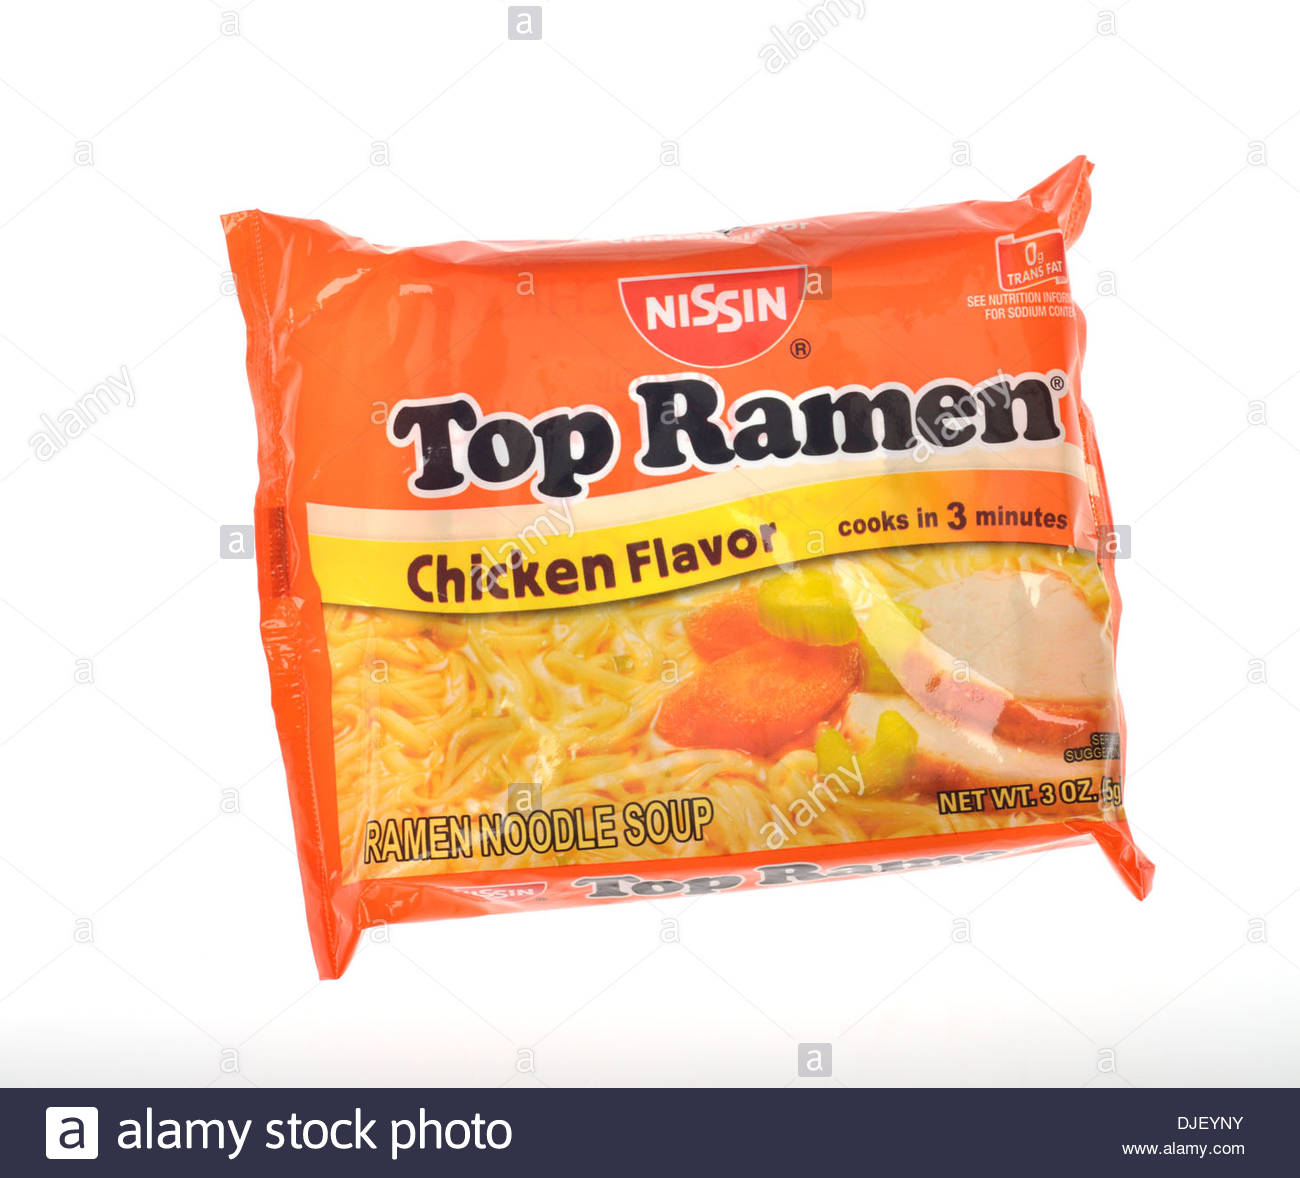 Top Ramen Chicken Noodle Family 12 Pack 36 Oz Rockmart 340